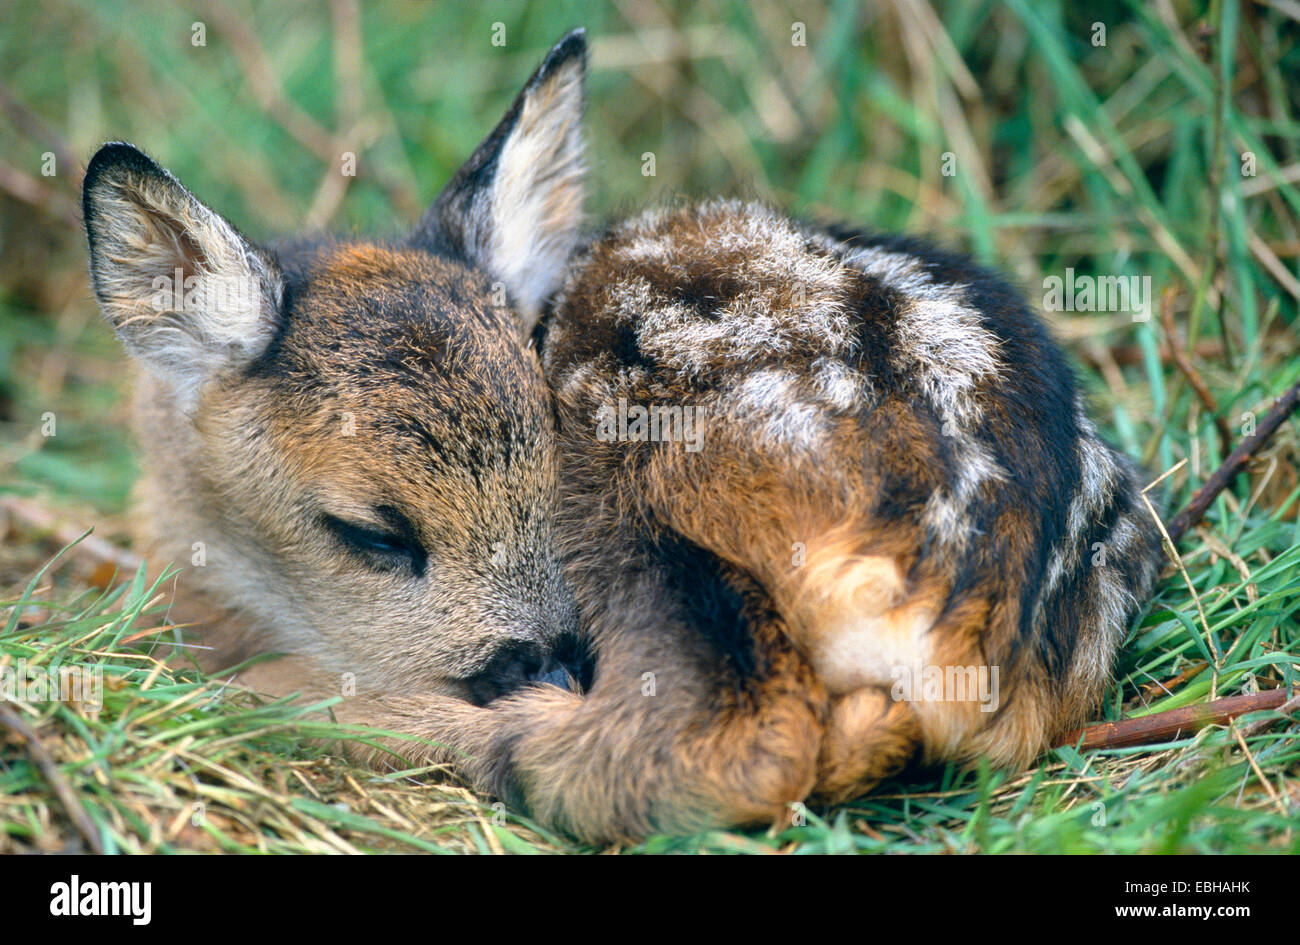 El corzo (Capreolus capreolus), dormir leonado, tumbado en la hierba, enrollada. Foto de stock